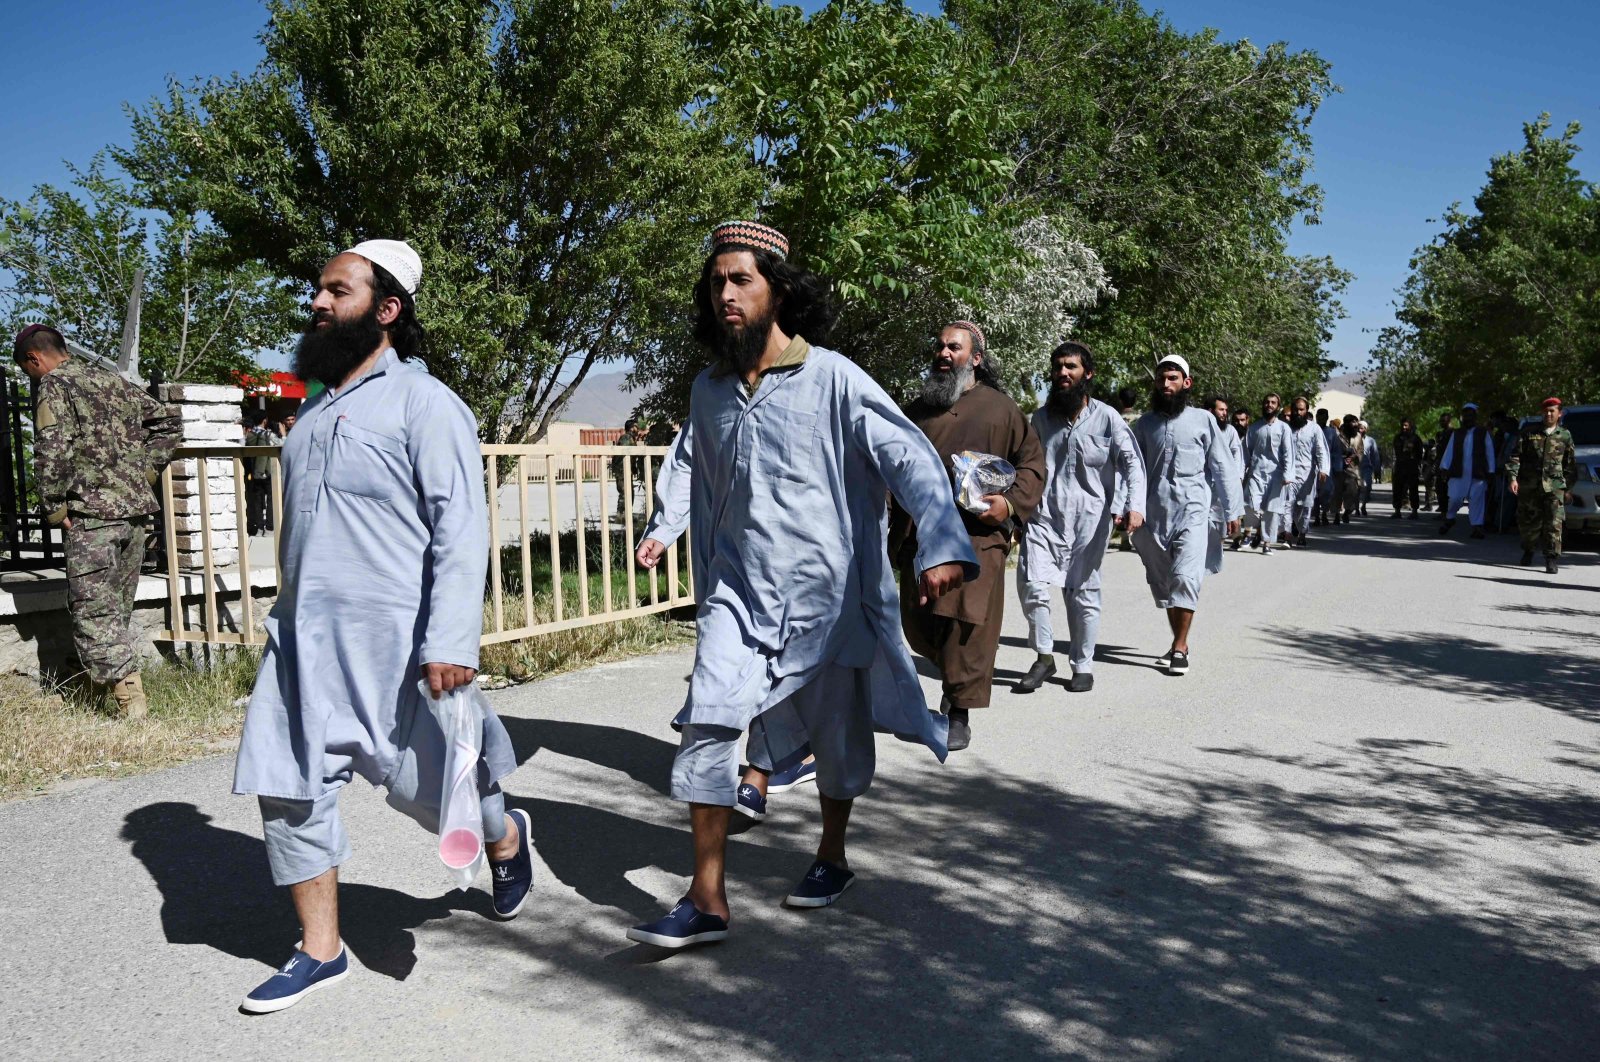 Freeing of Taliban prisoners from Bagram prison